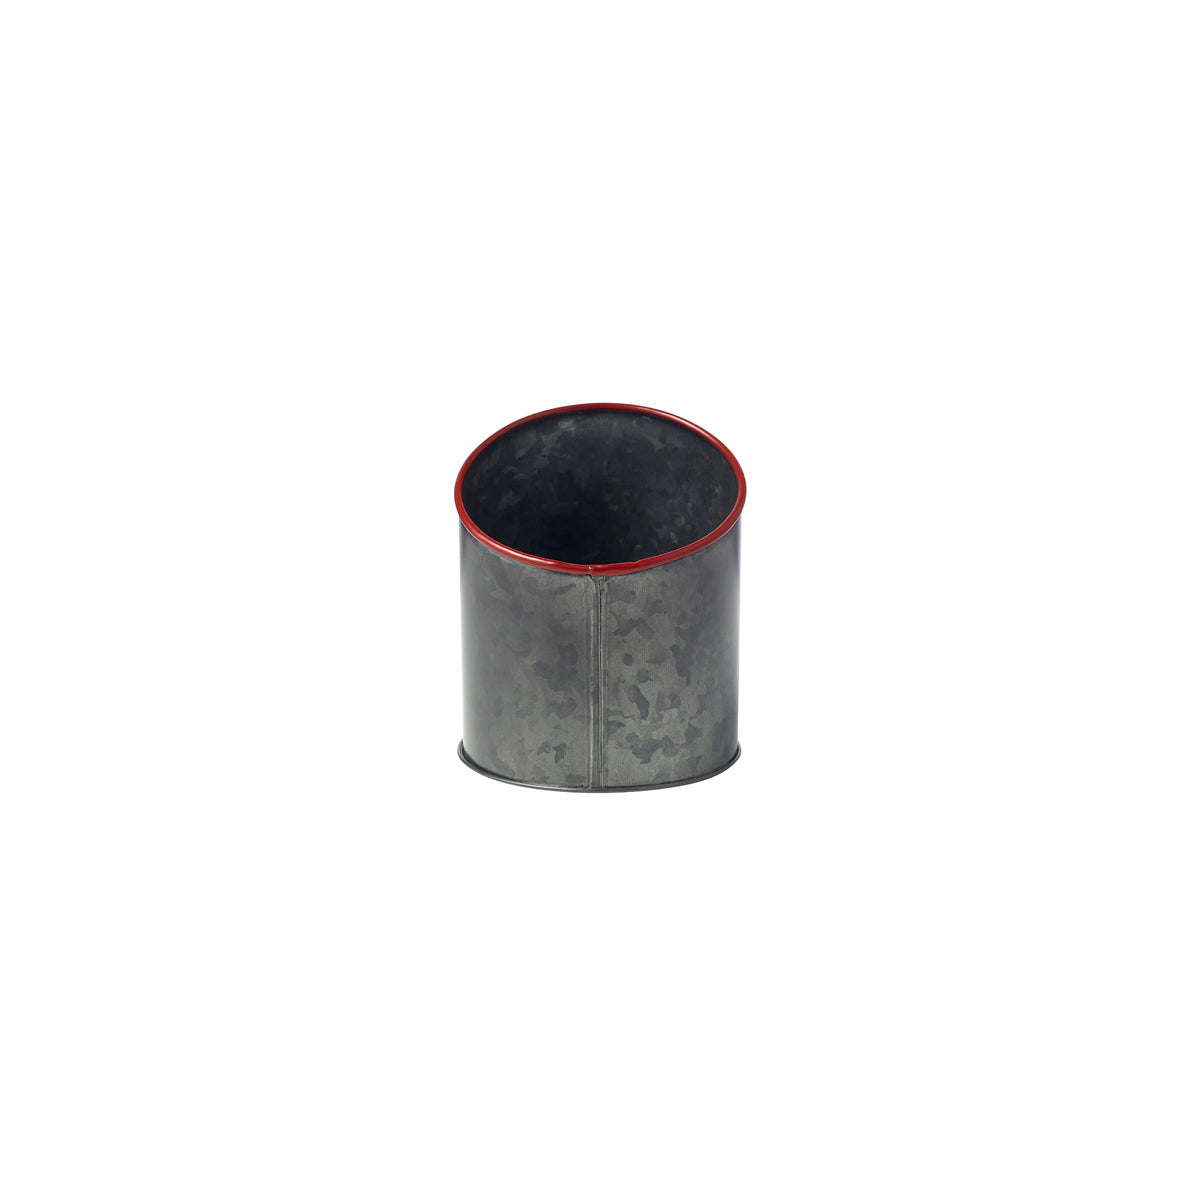 78715 Chef Inox Coney Island Slant Pot Black Galvanised with Red Rim 120x140mm Tomkin Australia Hospitality Supplies